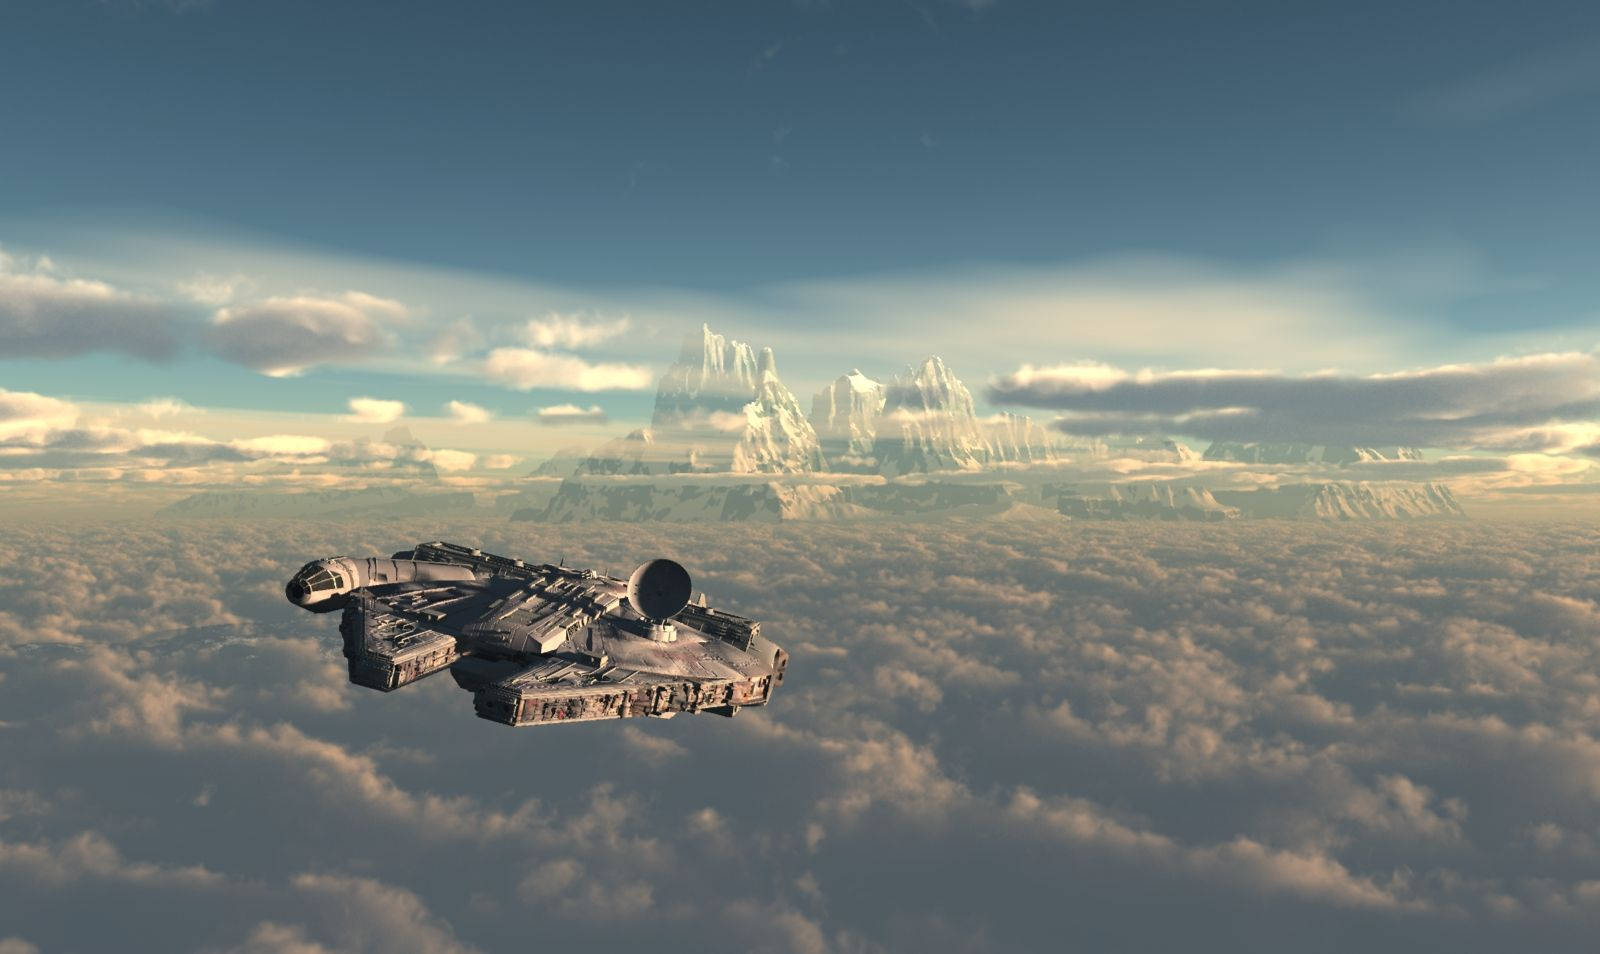 Millenium Falcon Over Star Wars Landscape Wallpaper